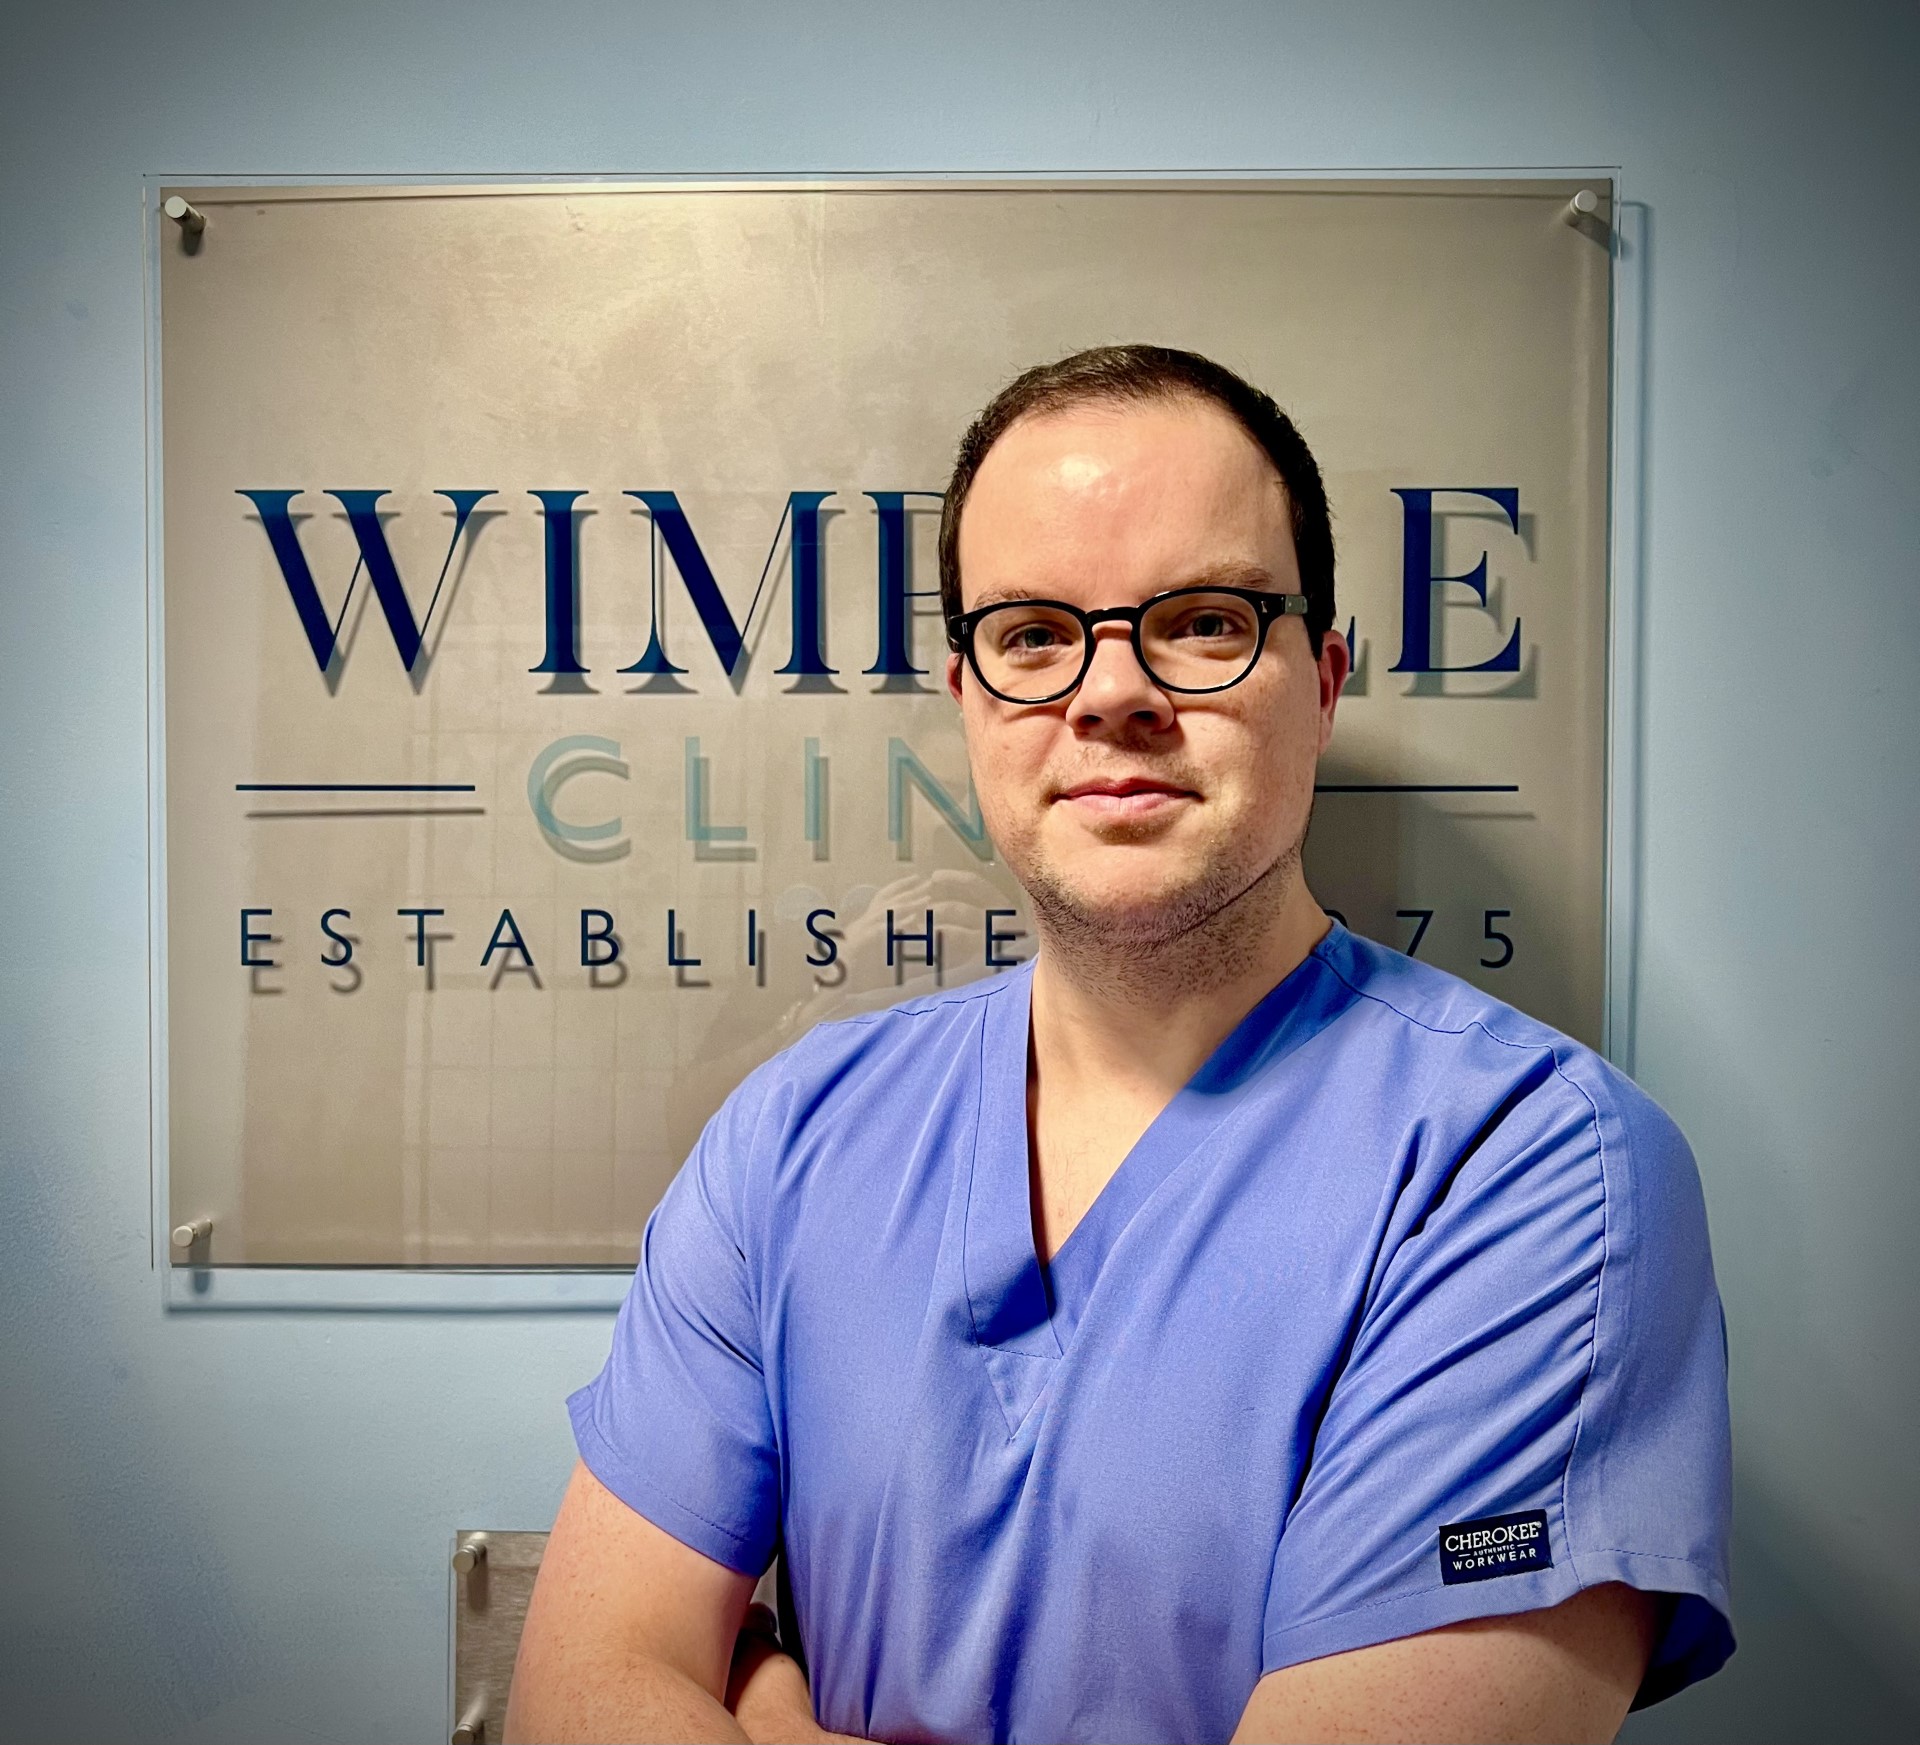 Our Surgeons, Wimpole Clinic